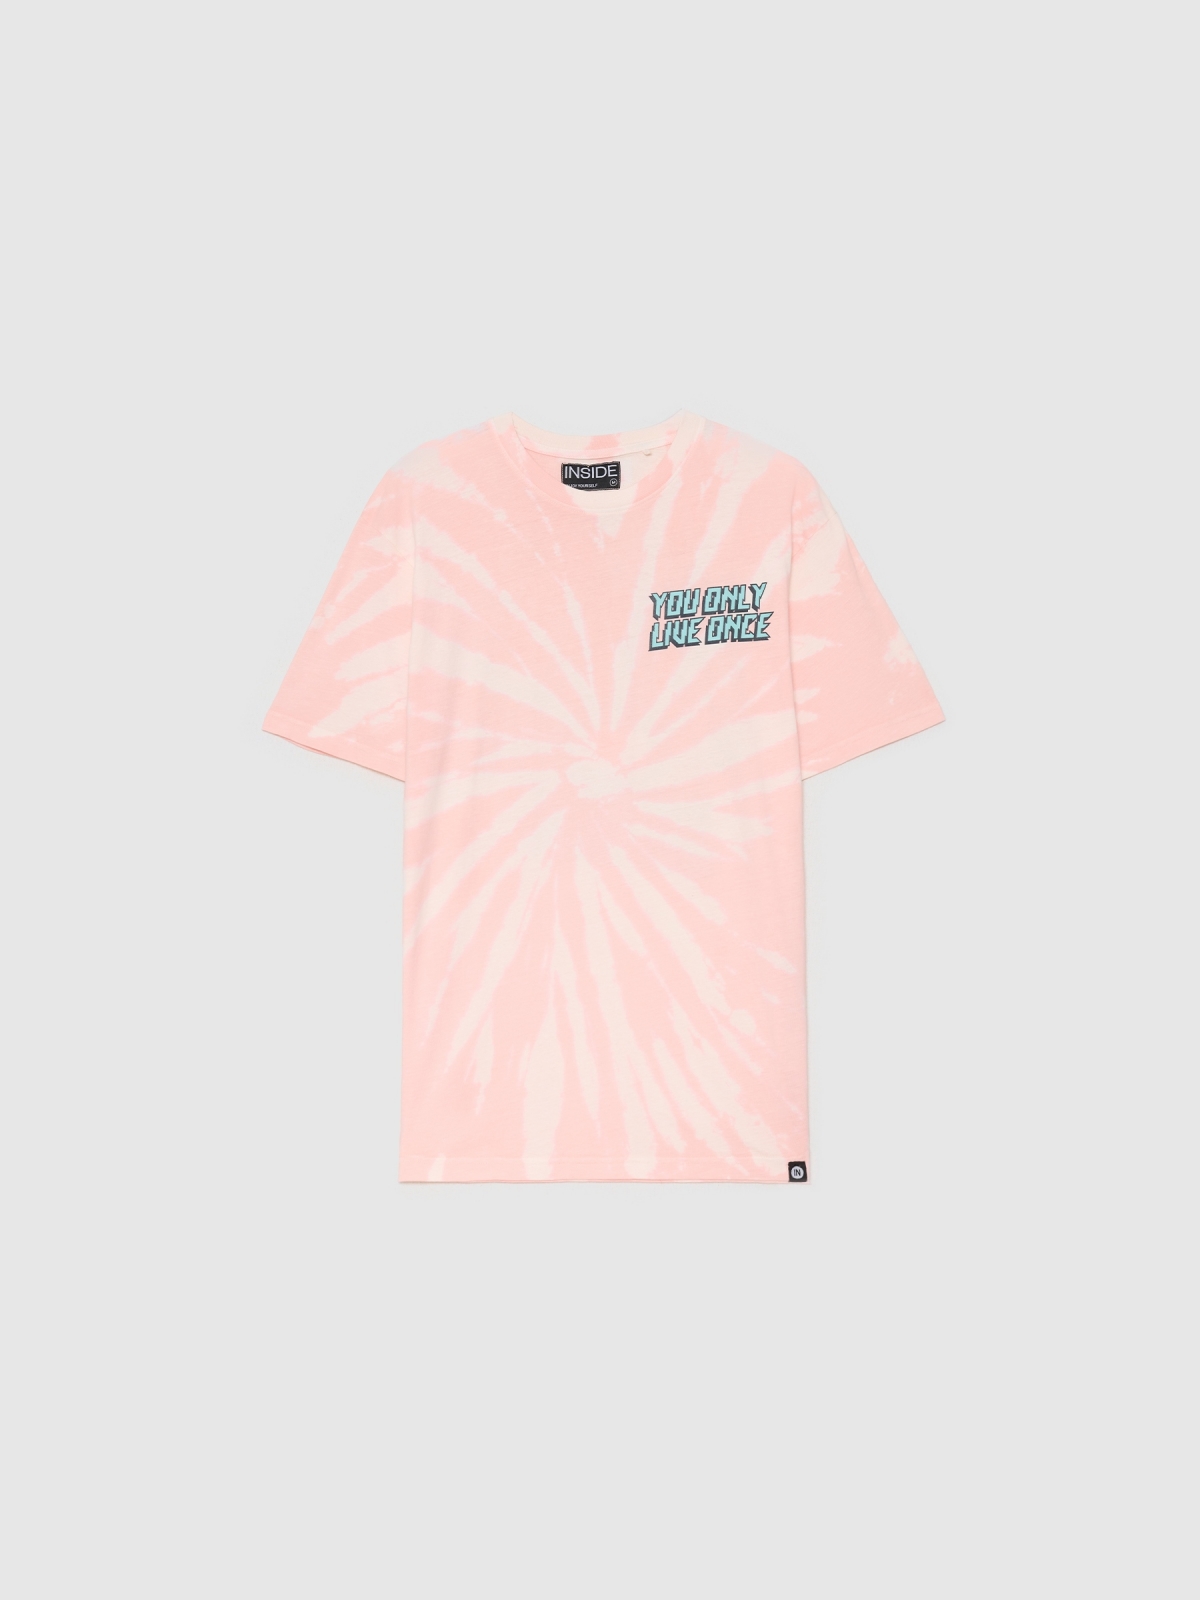 T-shirt de caveira tie dye rosa pêssego vista geral frontal